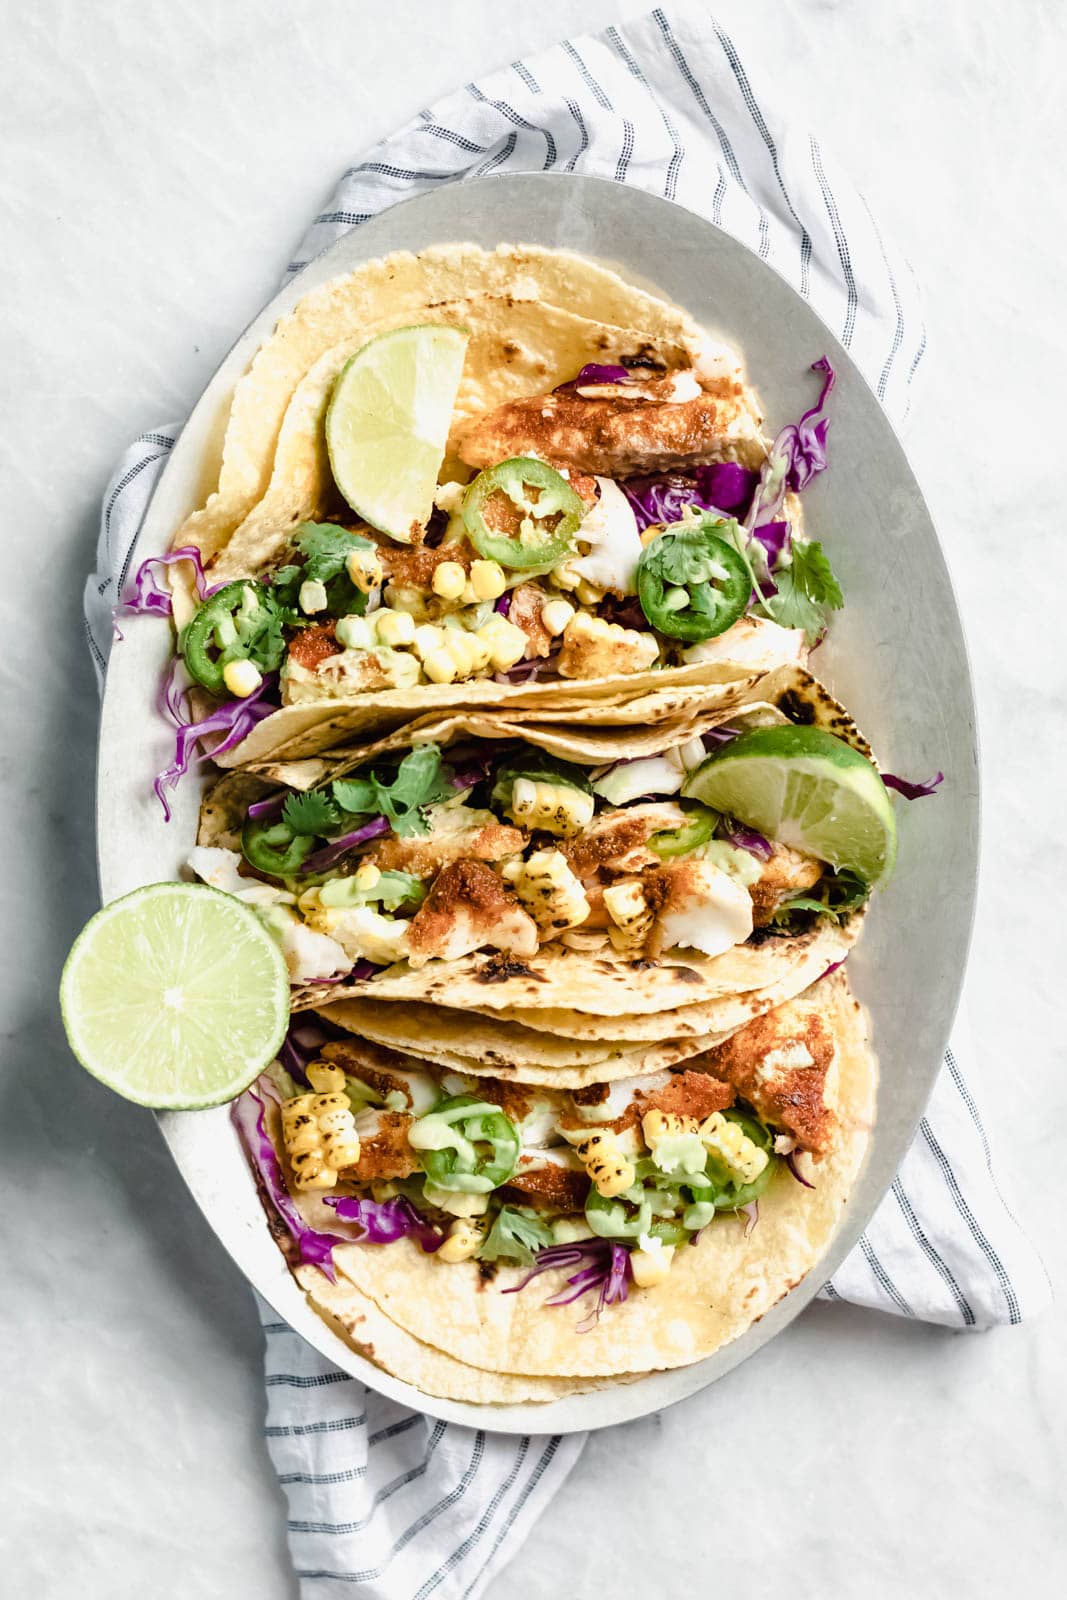 My go-to recipe for Taco Tuesday fish tacos: flakey blackened fish, cabbage, charred corn, jalapeños, and a “creamy” dairy-free avocado cilantro crema! 